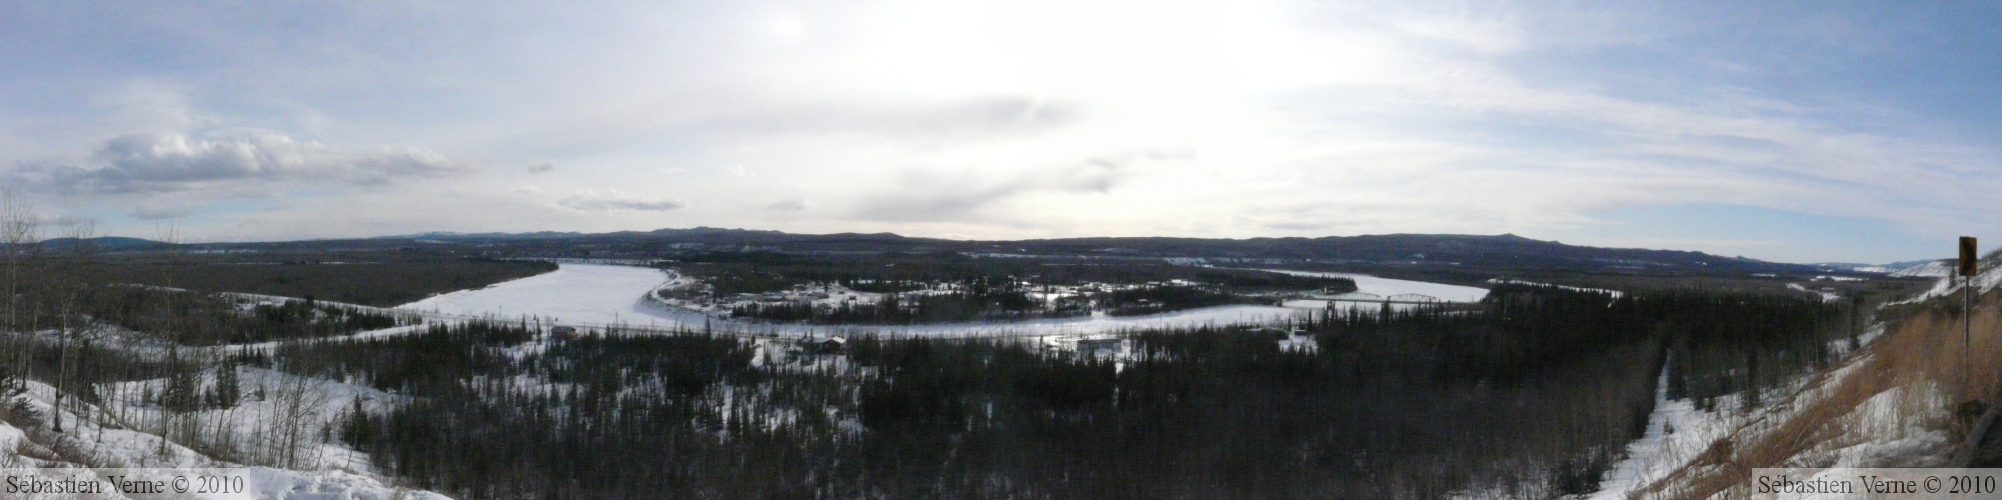 P1190861-Panorama Dempster Winter 08.jpg